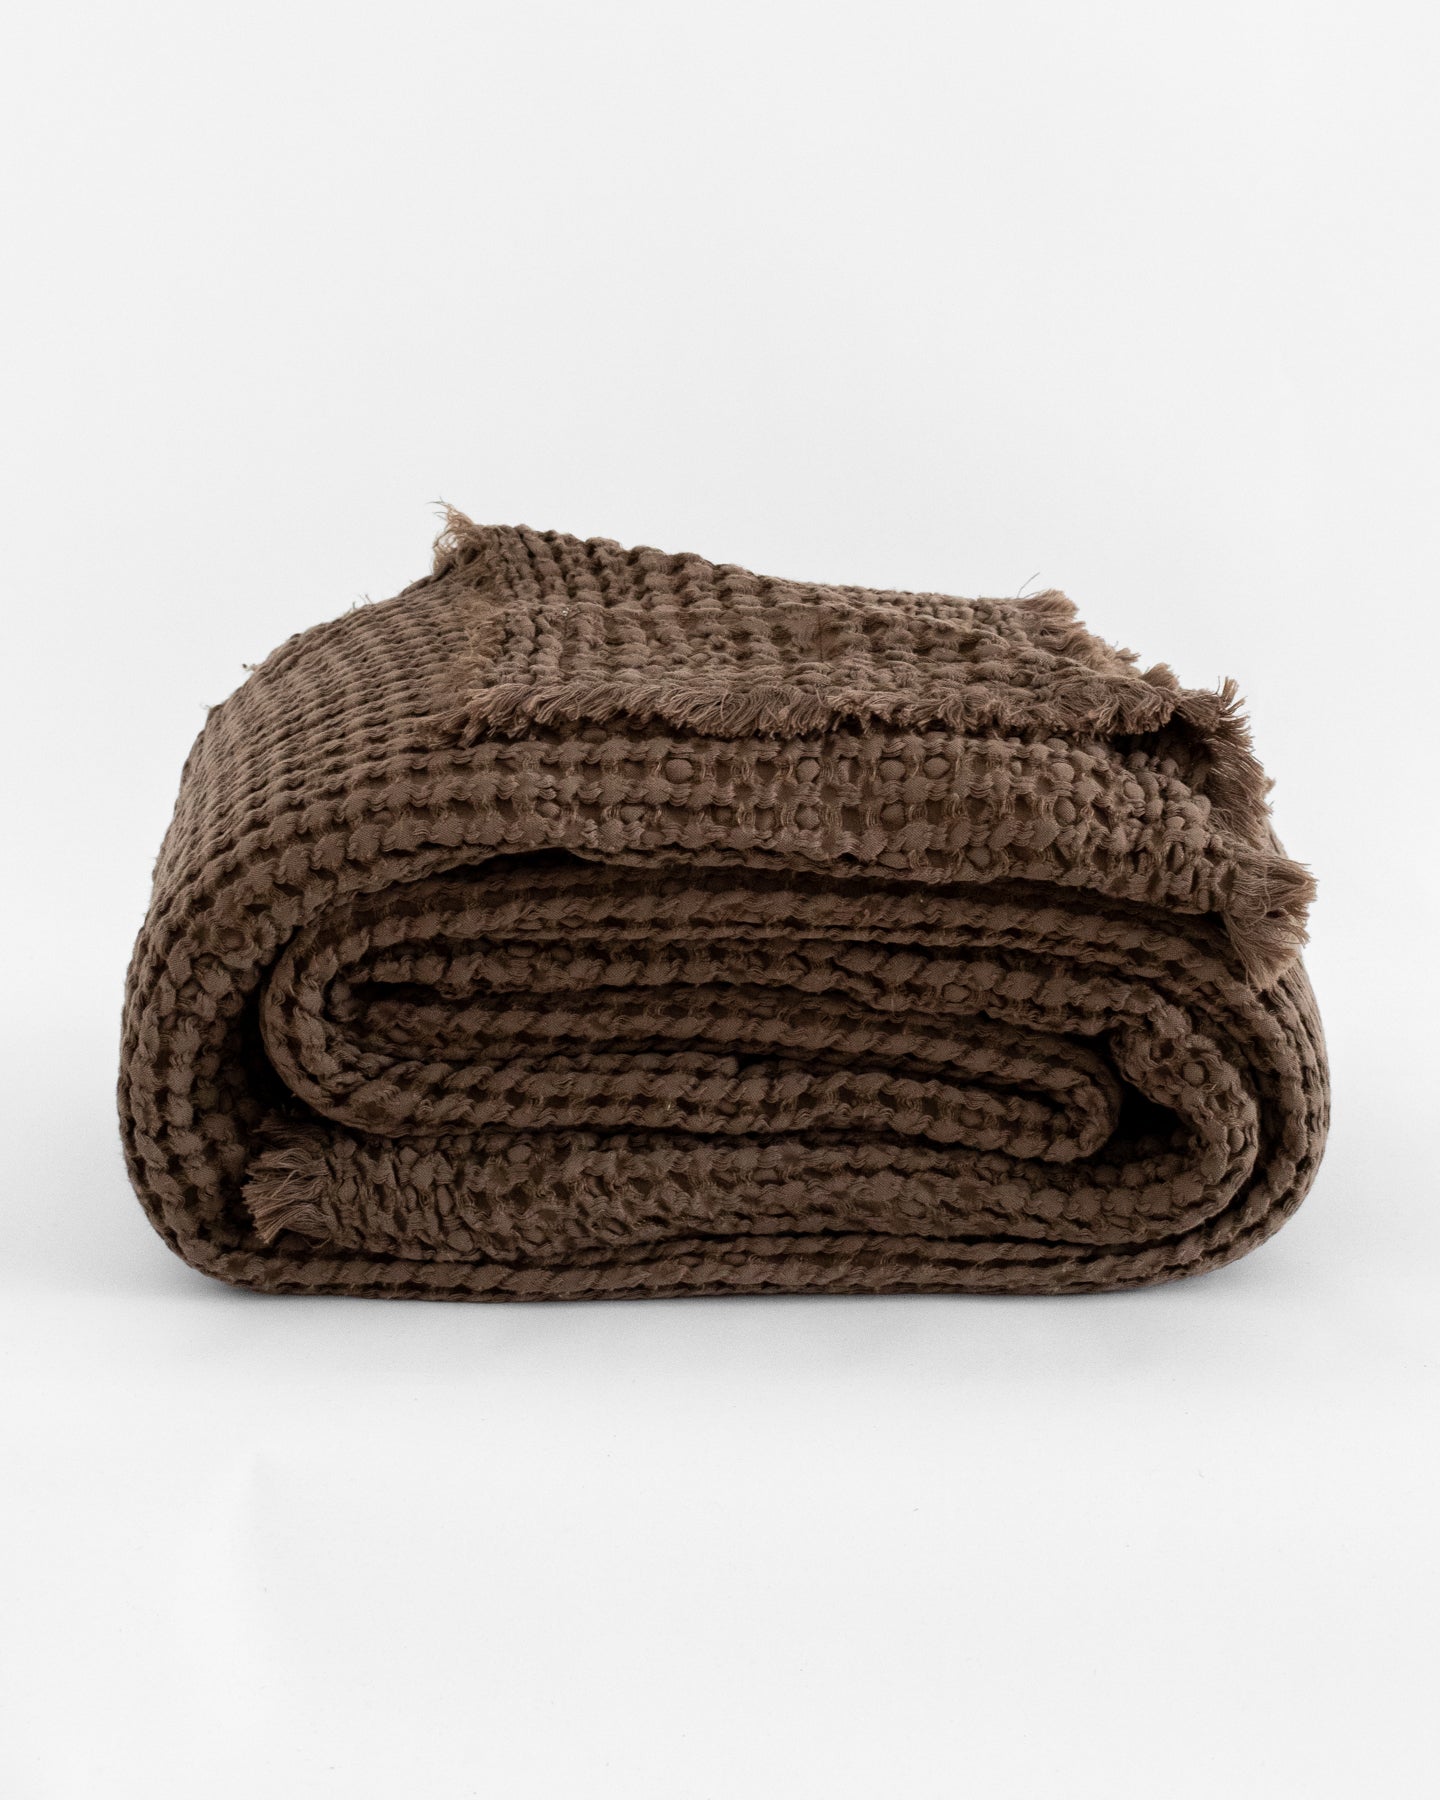 Flocca Linen Hand Towel - Sable